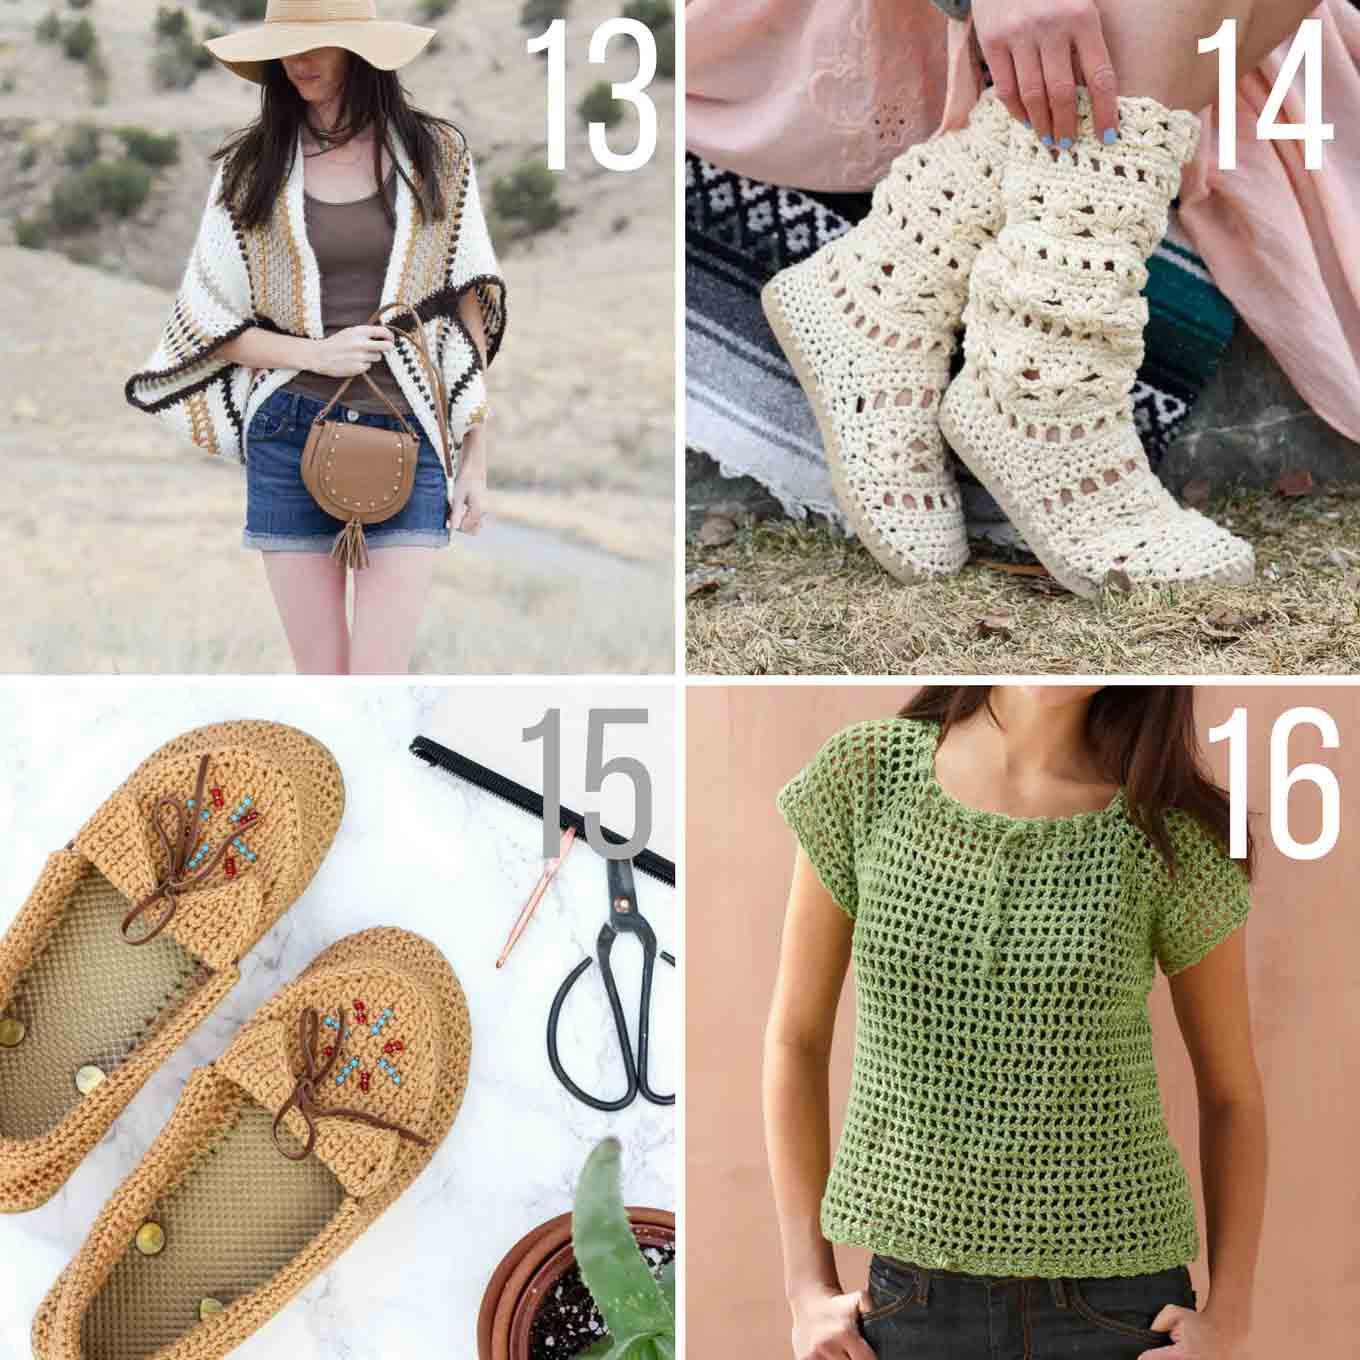 Crocheting Ideas For Summer
 24 Popular Spring and Summer Crochet Patterns All Free